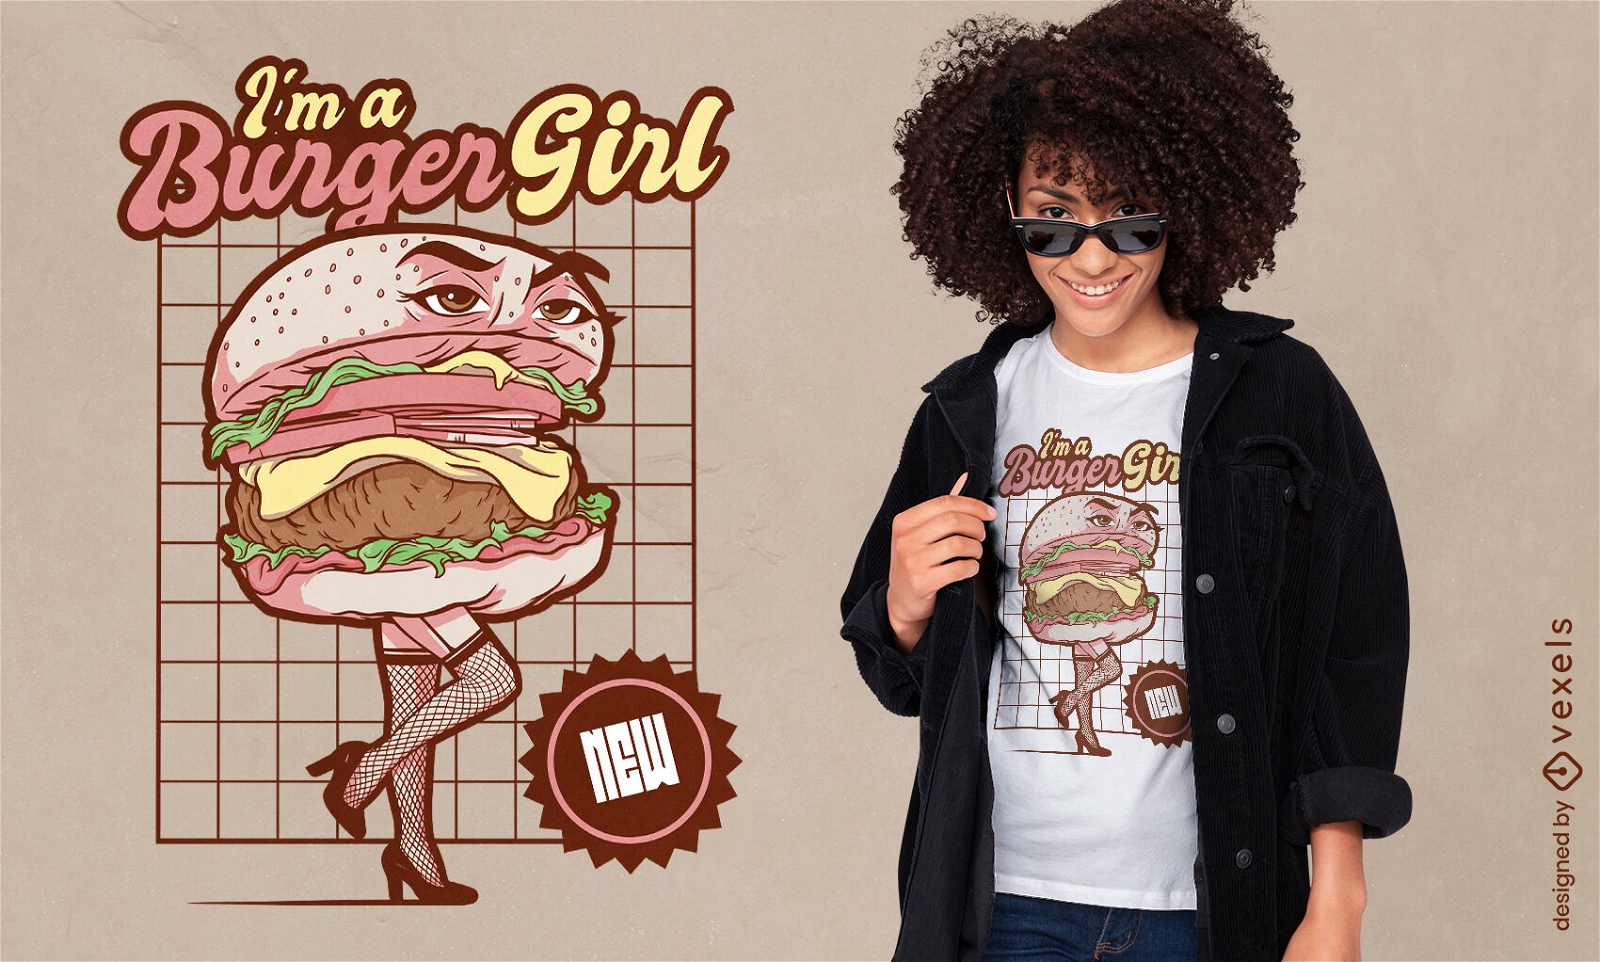 Dise?o de camiseta de personaje de chica hamburguesa.